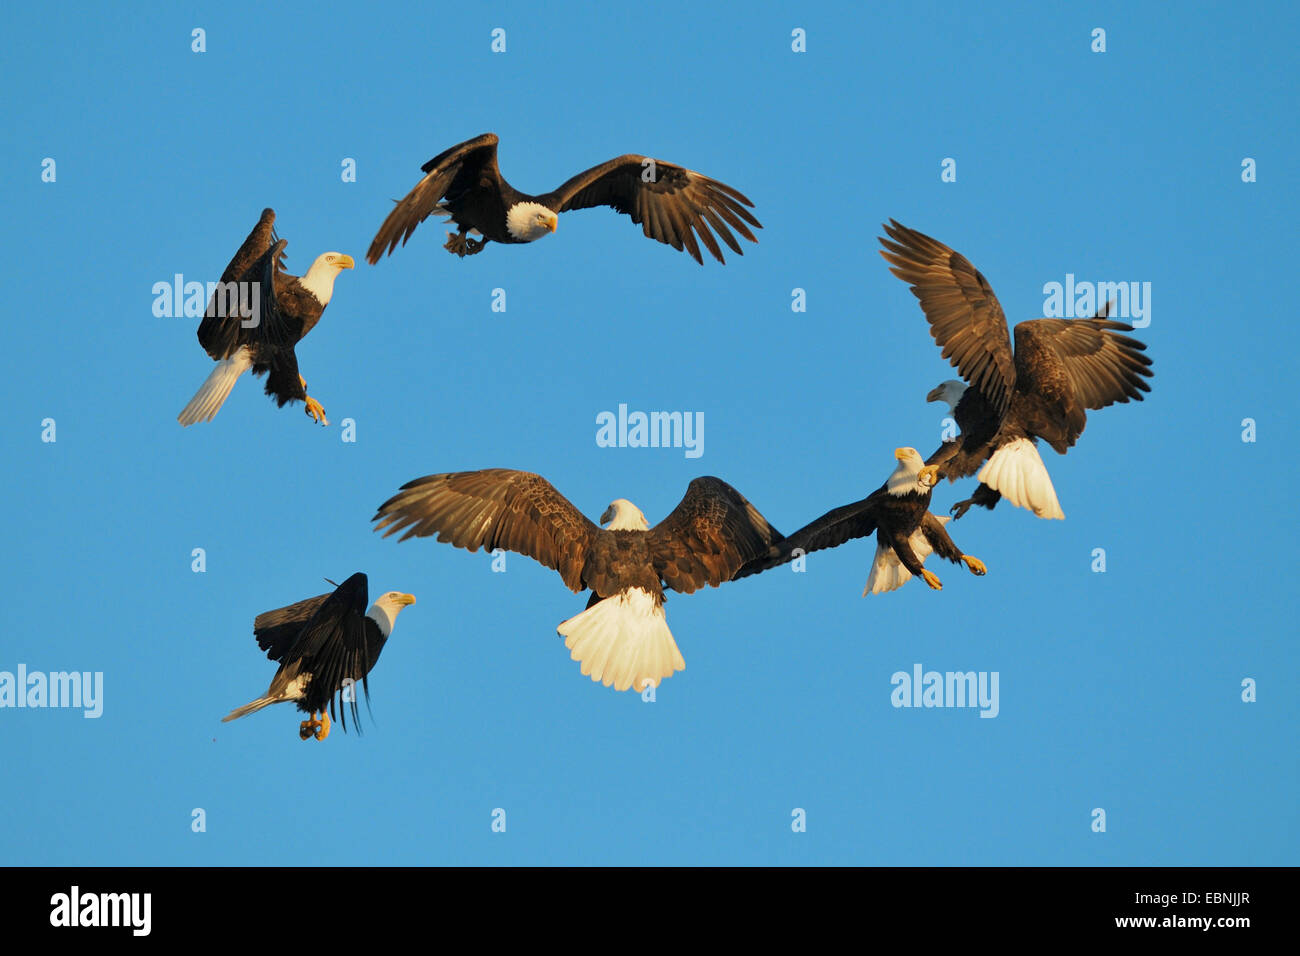 águilas en vuelo fotografías e imágenes de alta resolución - Alamy